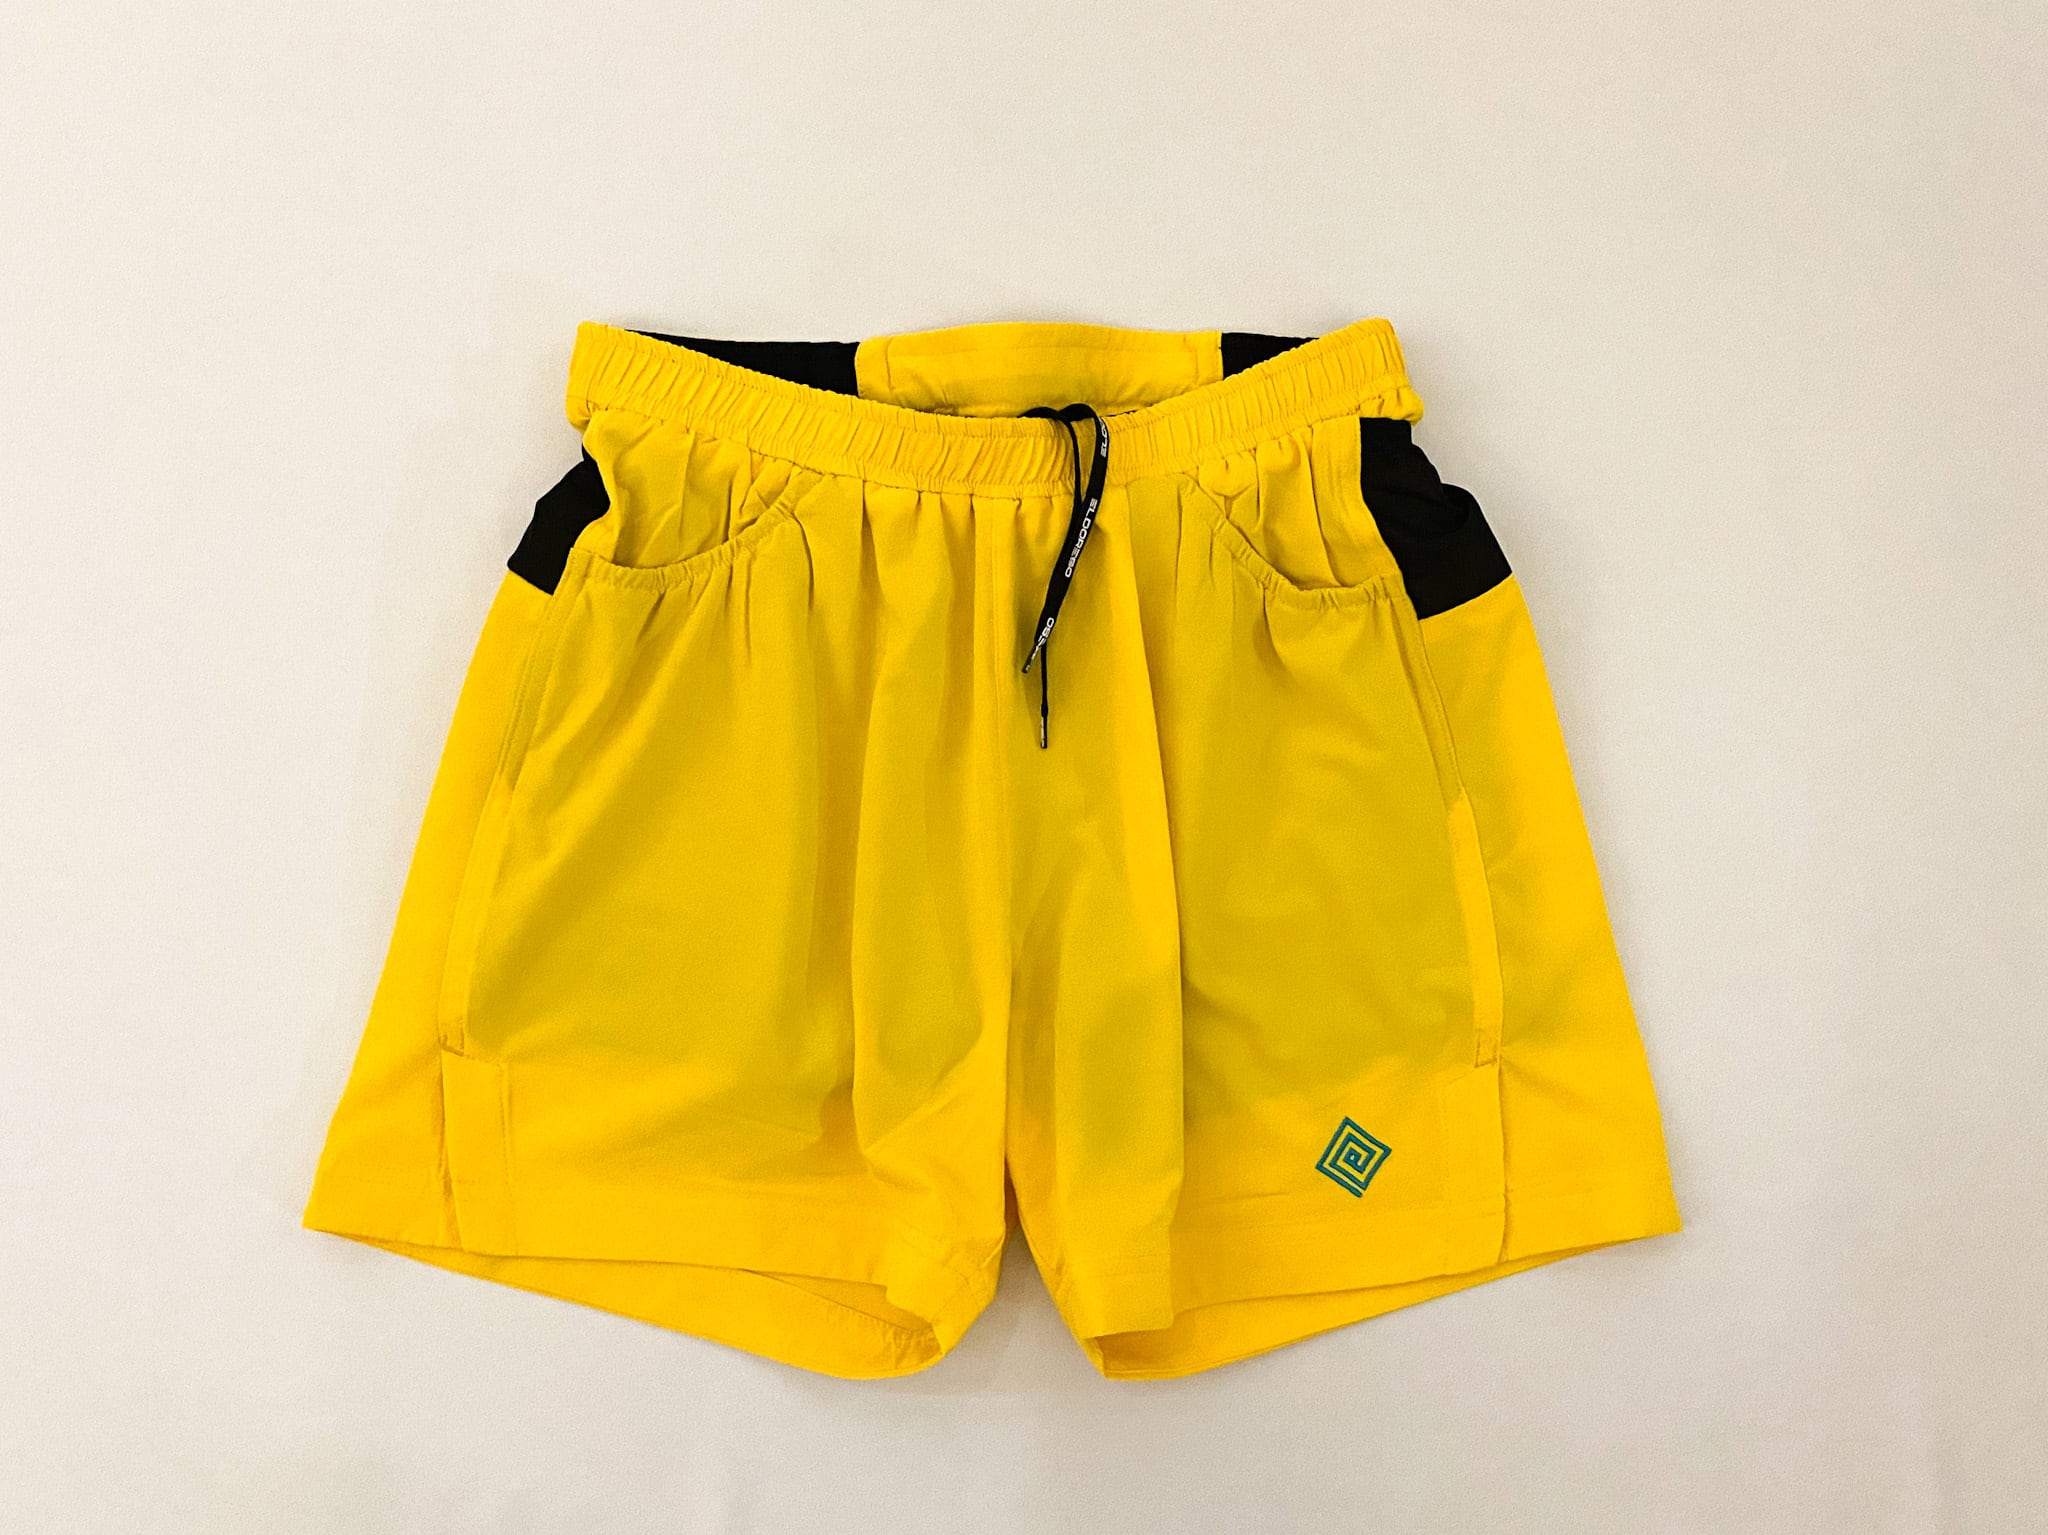 ELDORESO(エルドレッソ) Neo Bikila Shorts(Yellow)  メンズ・レディース ショートパンツ